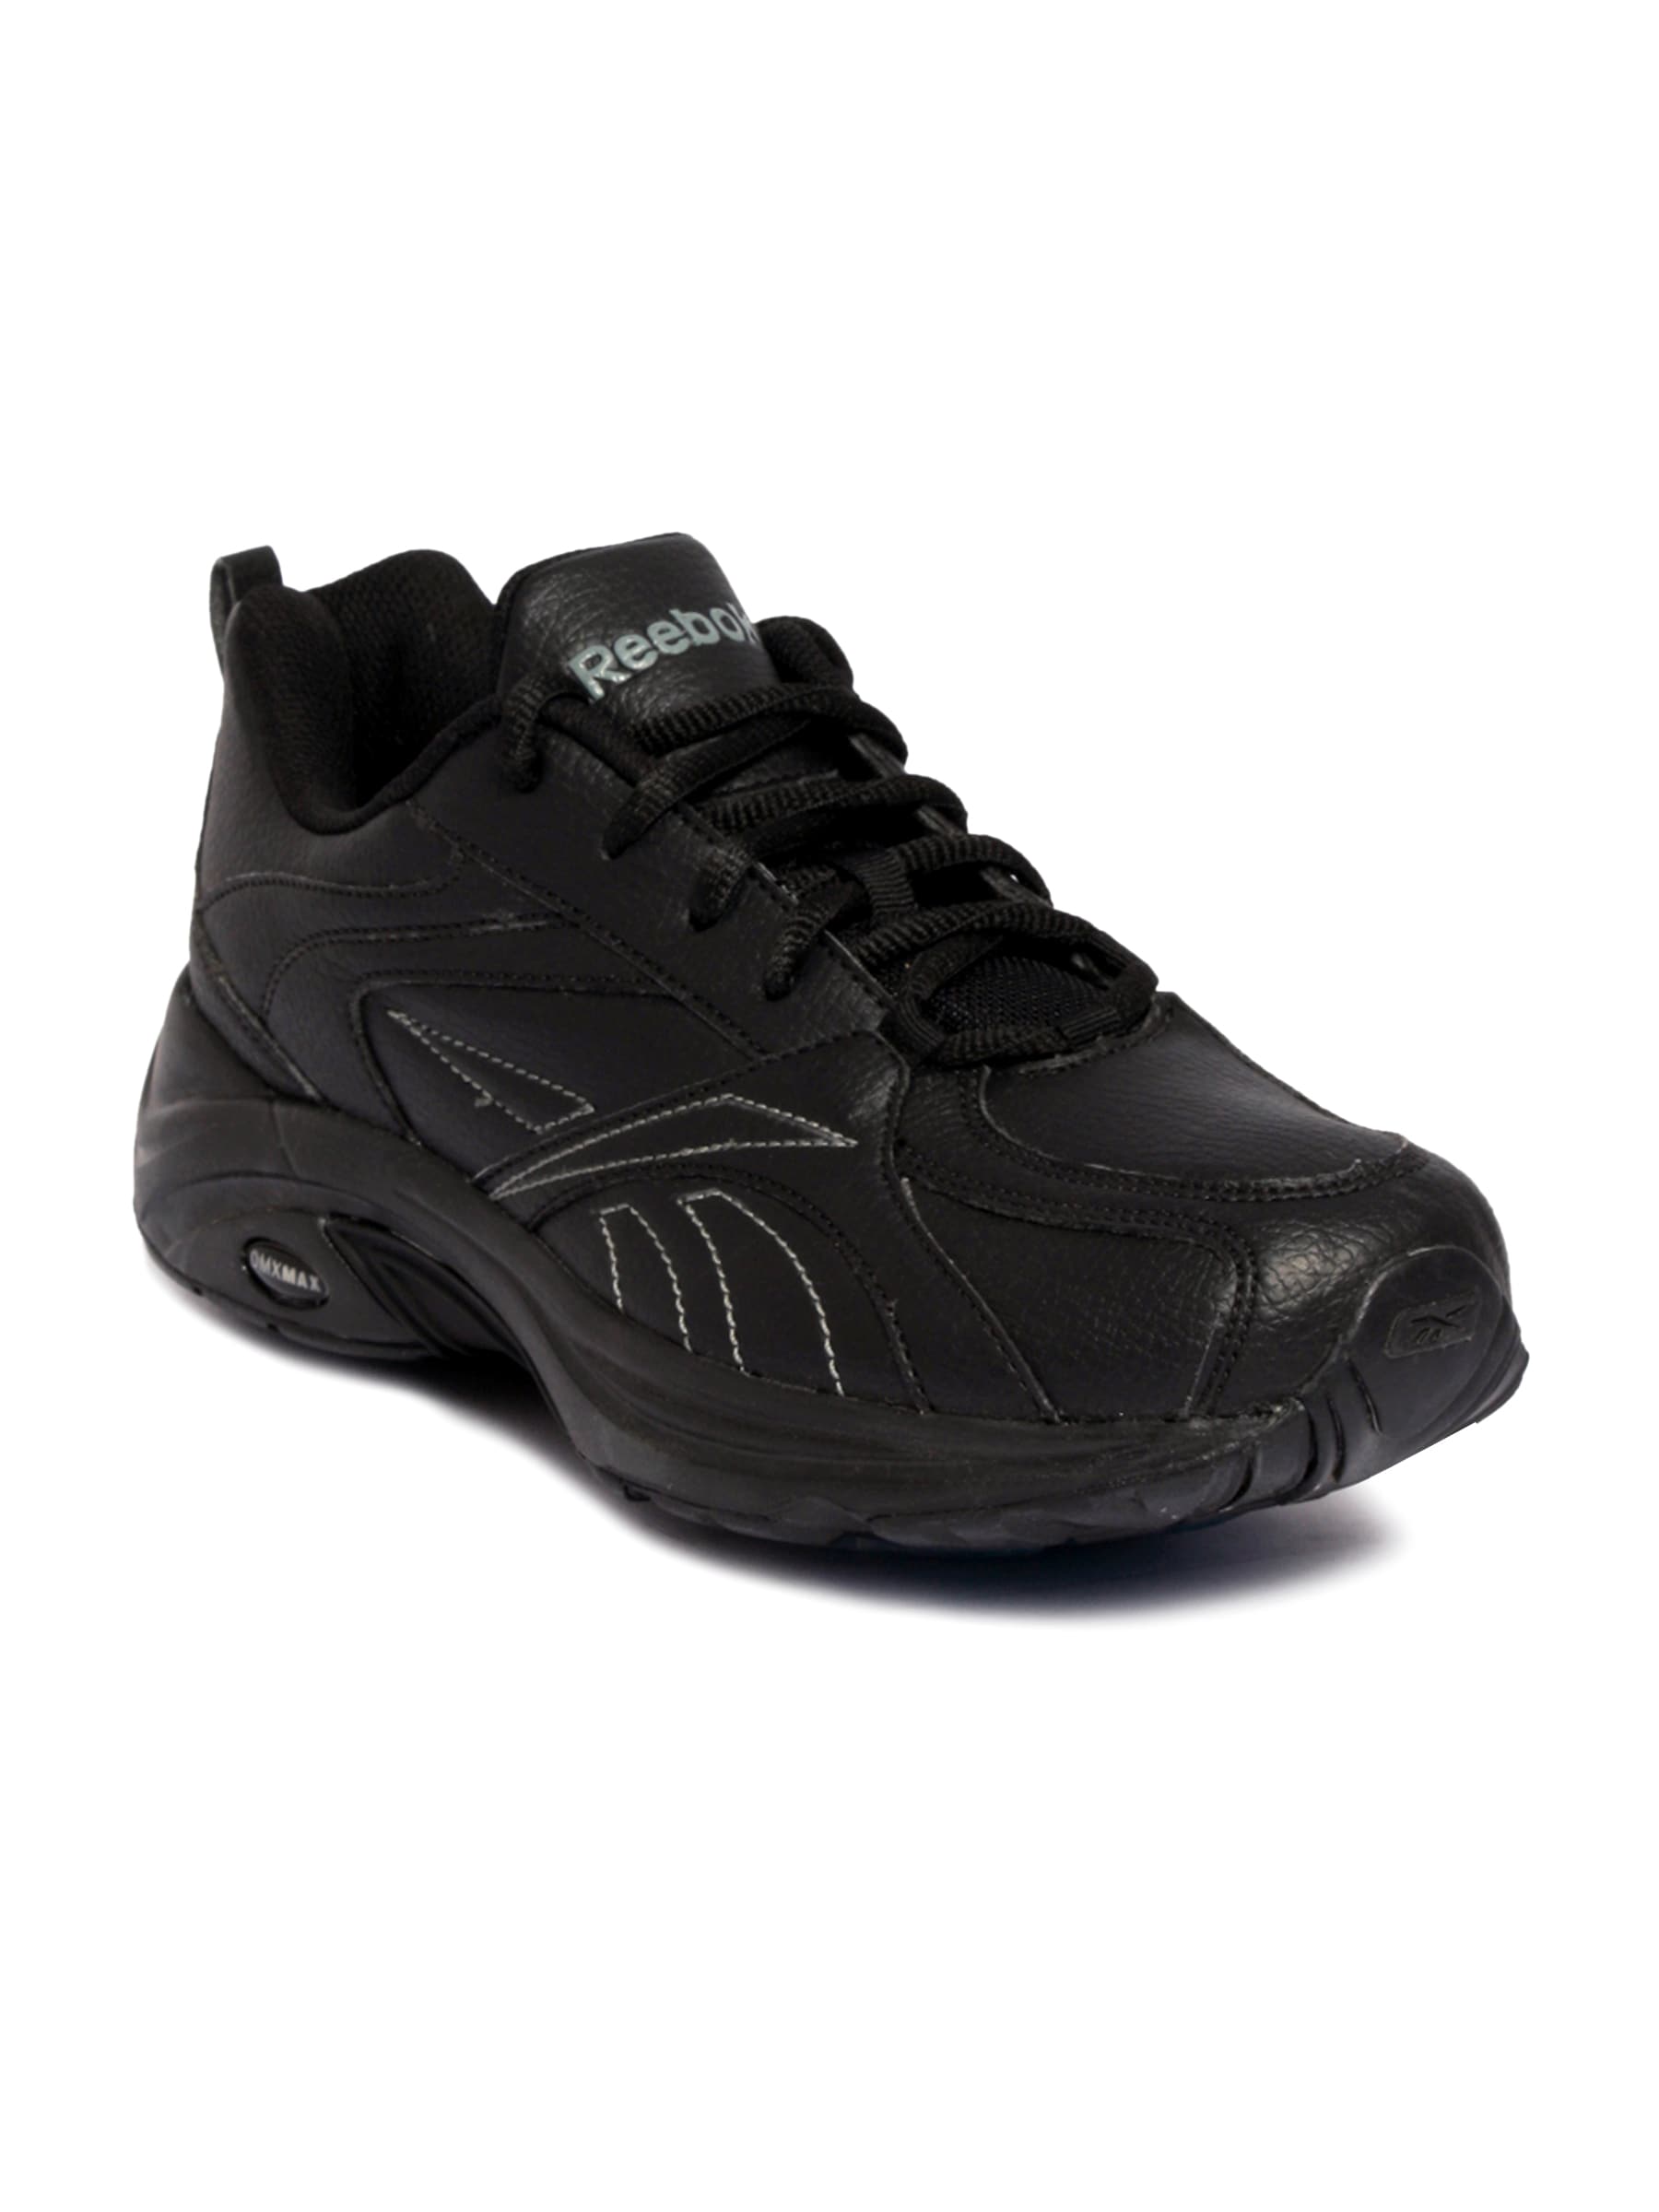 Reebok Men Walk Max PU Black Sports Shoes